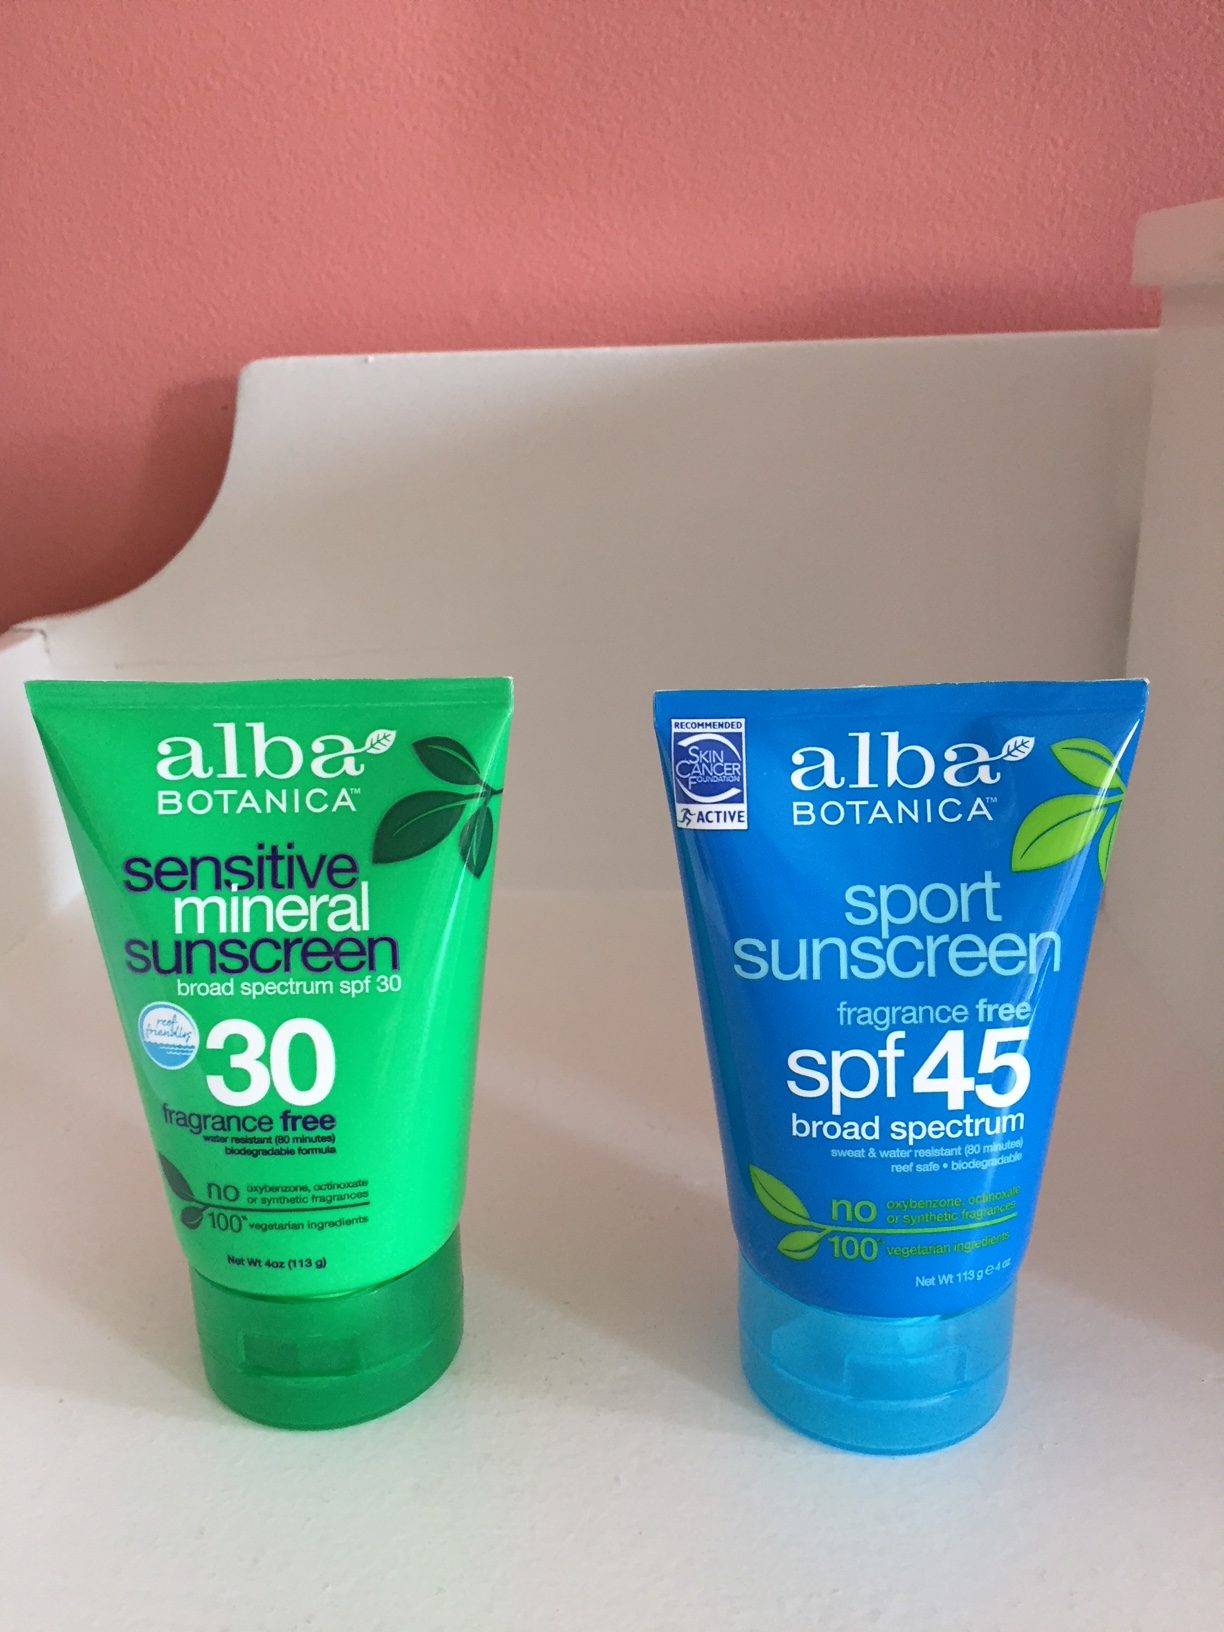 Review, Ingredients, Photos, Skincare Trend, 2019, 2020: Sun Protection for Summer, Sunscreen for Sensitive Skin, Alba Botanica Sport Sunscreen SPF 45, Sensitive Mineral Sunscreen SPF 30